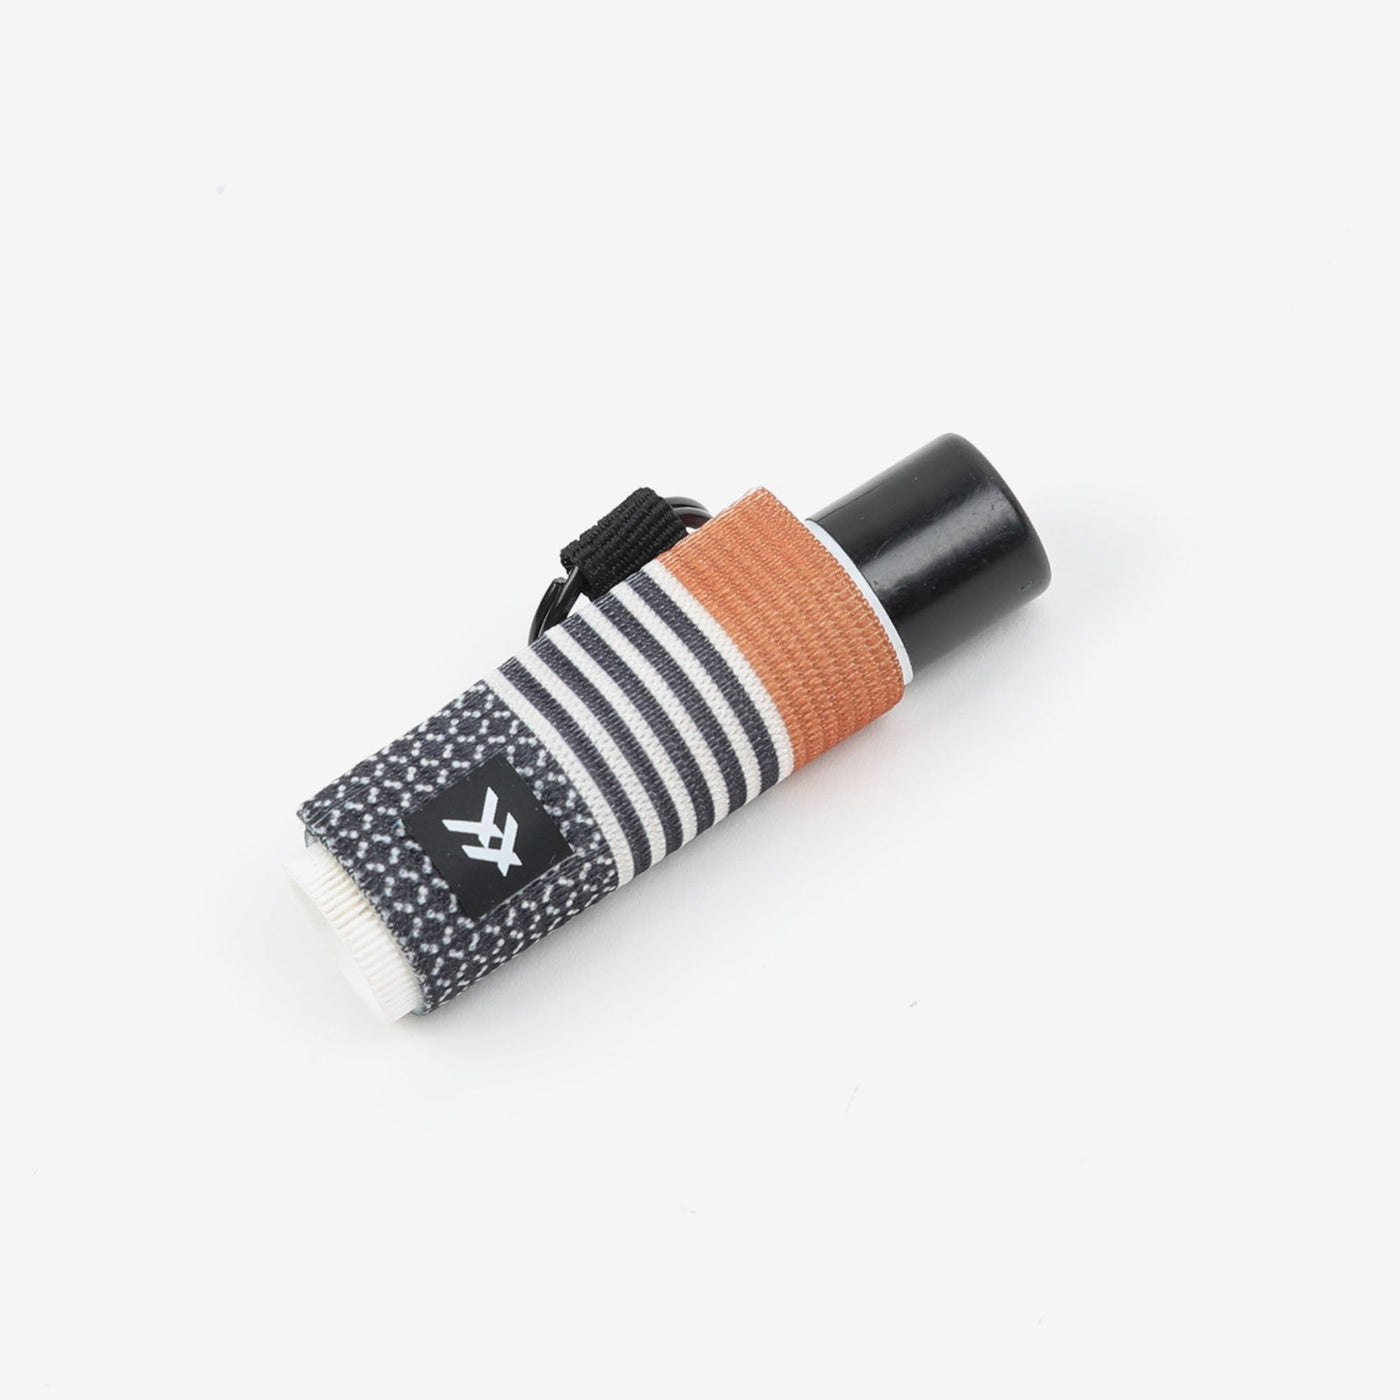 Black, white, and brown striped lip balm holder